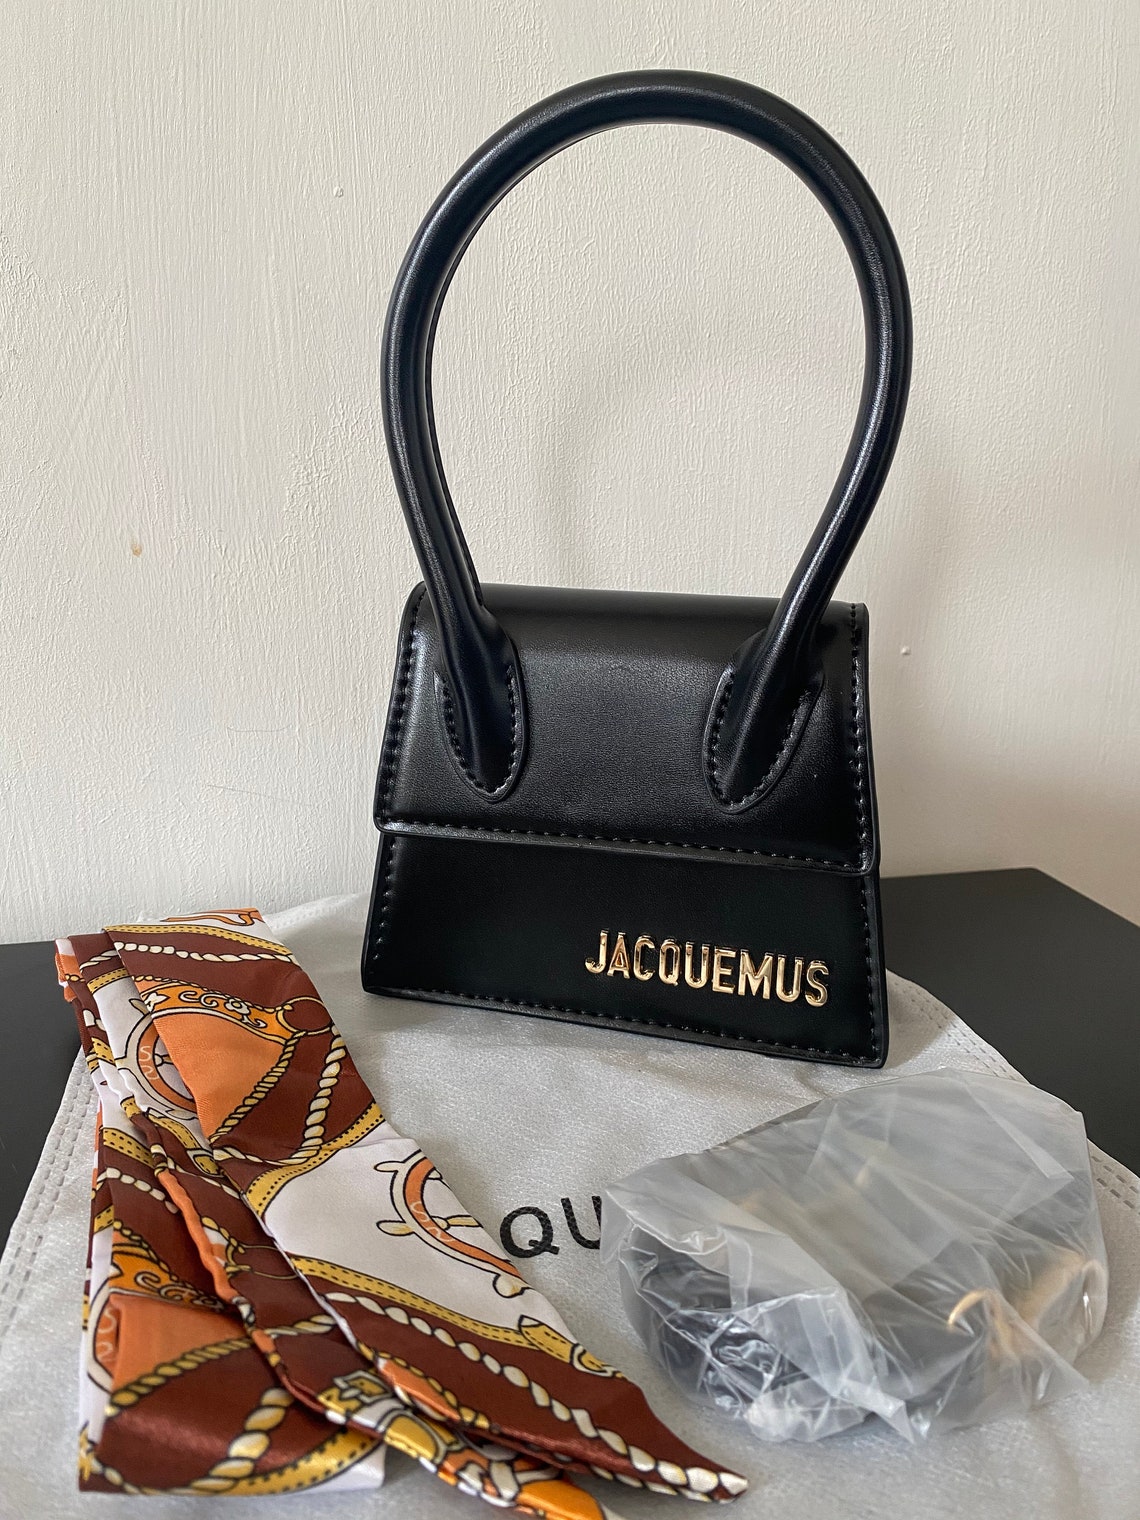 Jacquemus Small High Quality Black Bag For Women | Etsy